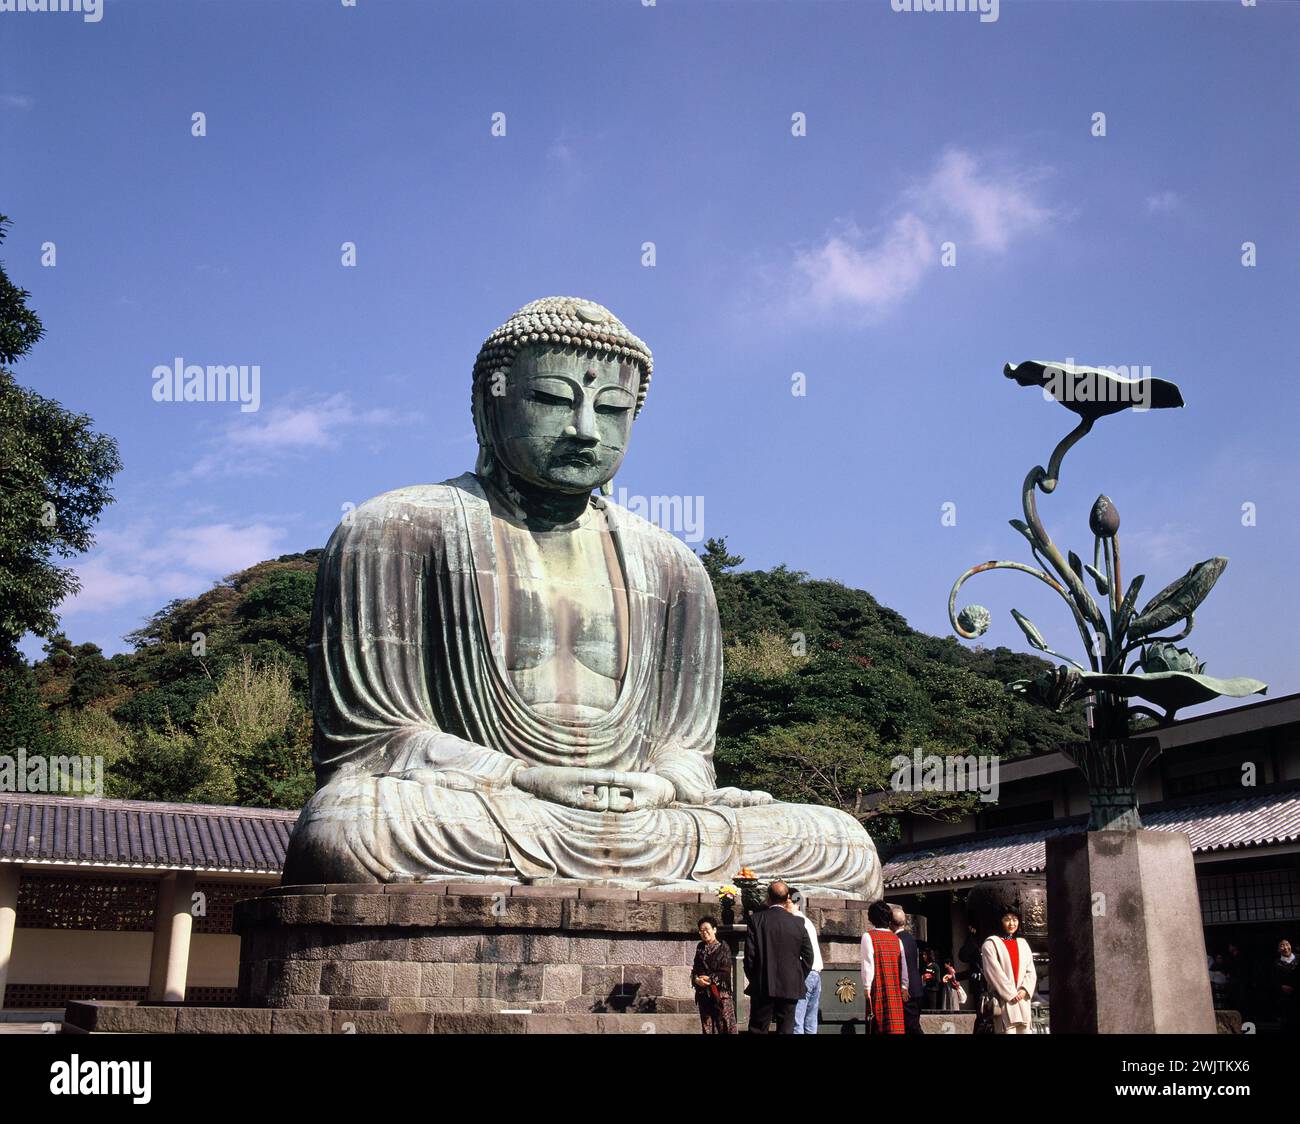 Giappone. Kanagawa. Kamakura. Kōtoku-poll. Il grande Buddha con un gruppo di visitatori. Foto Stock